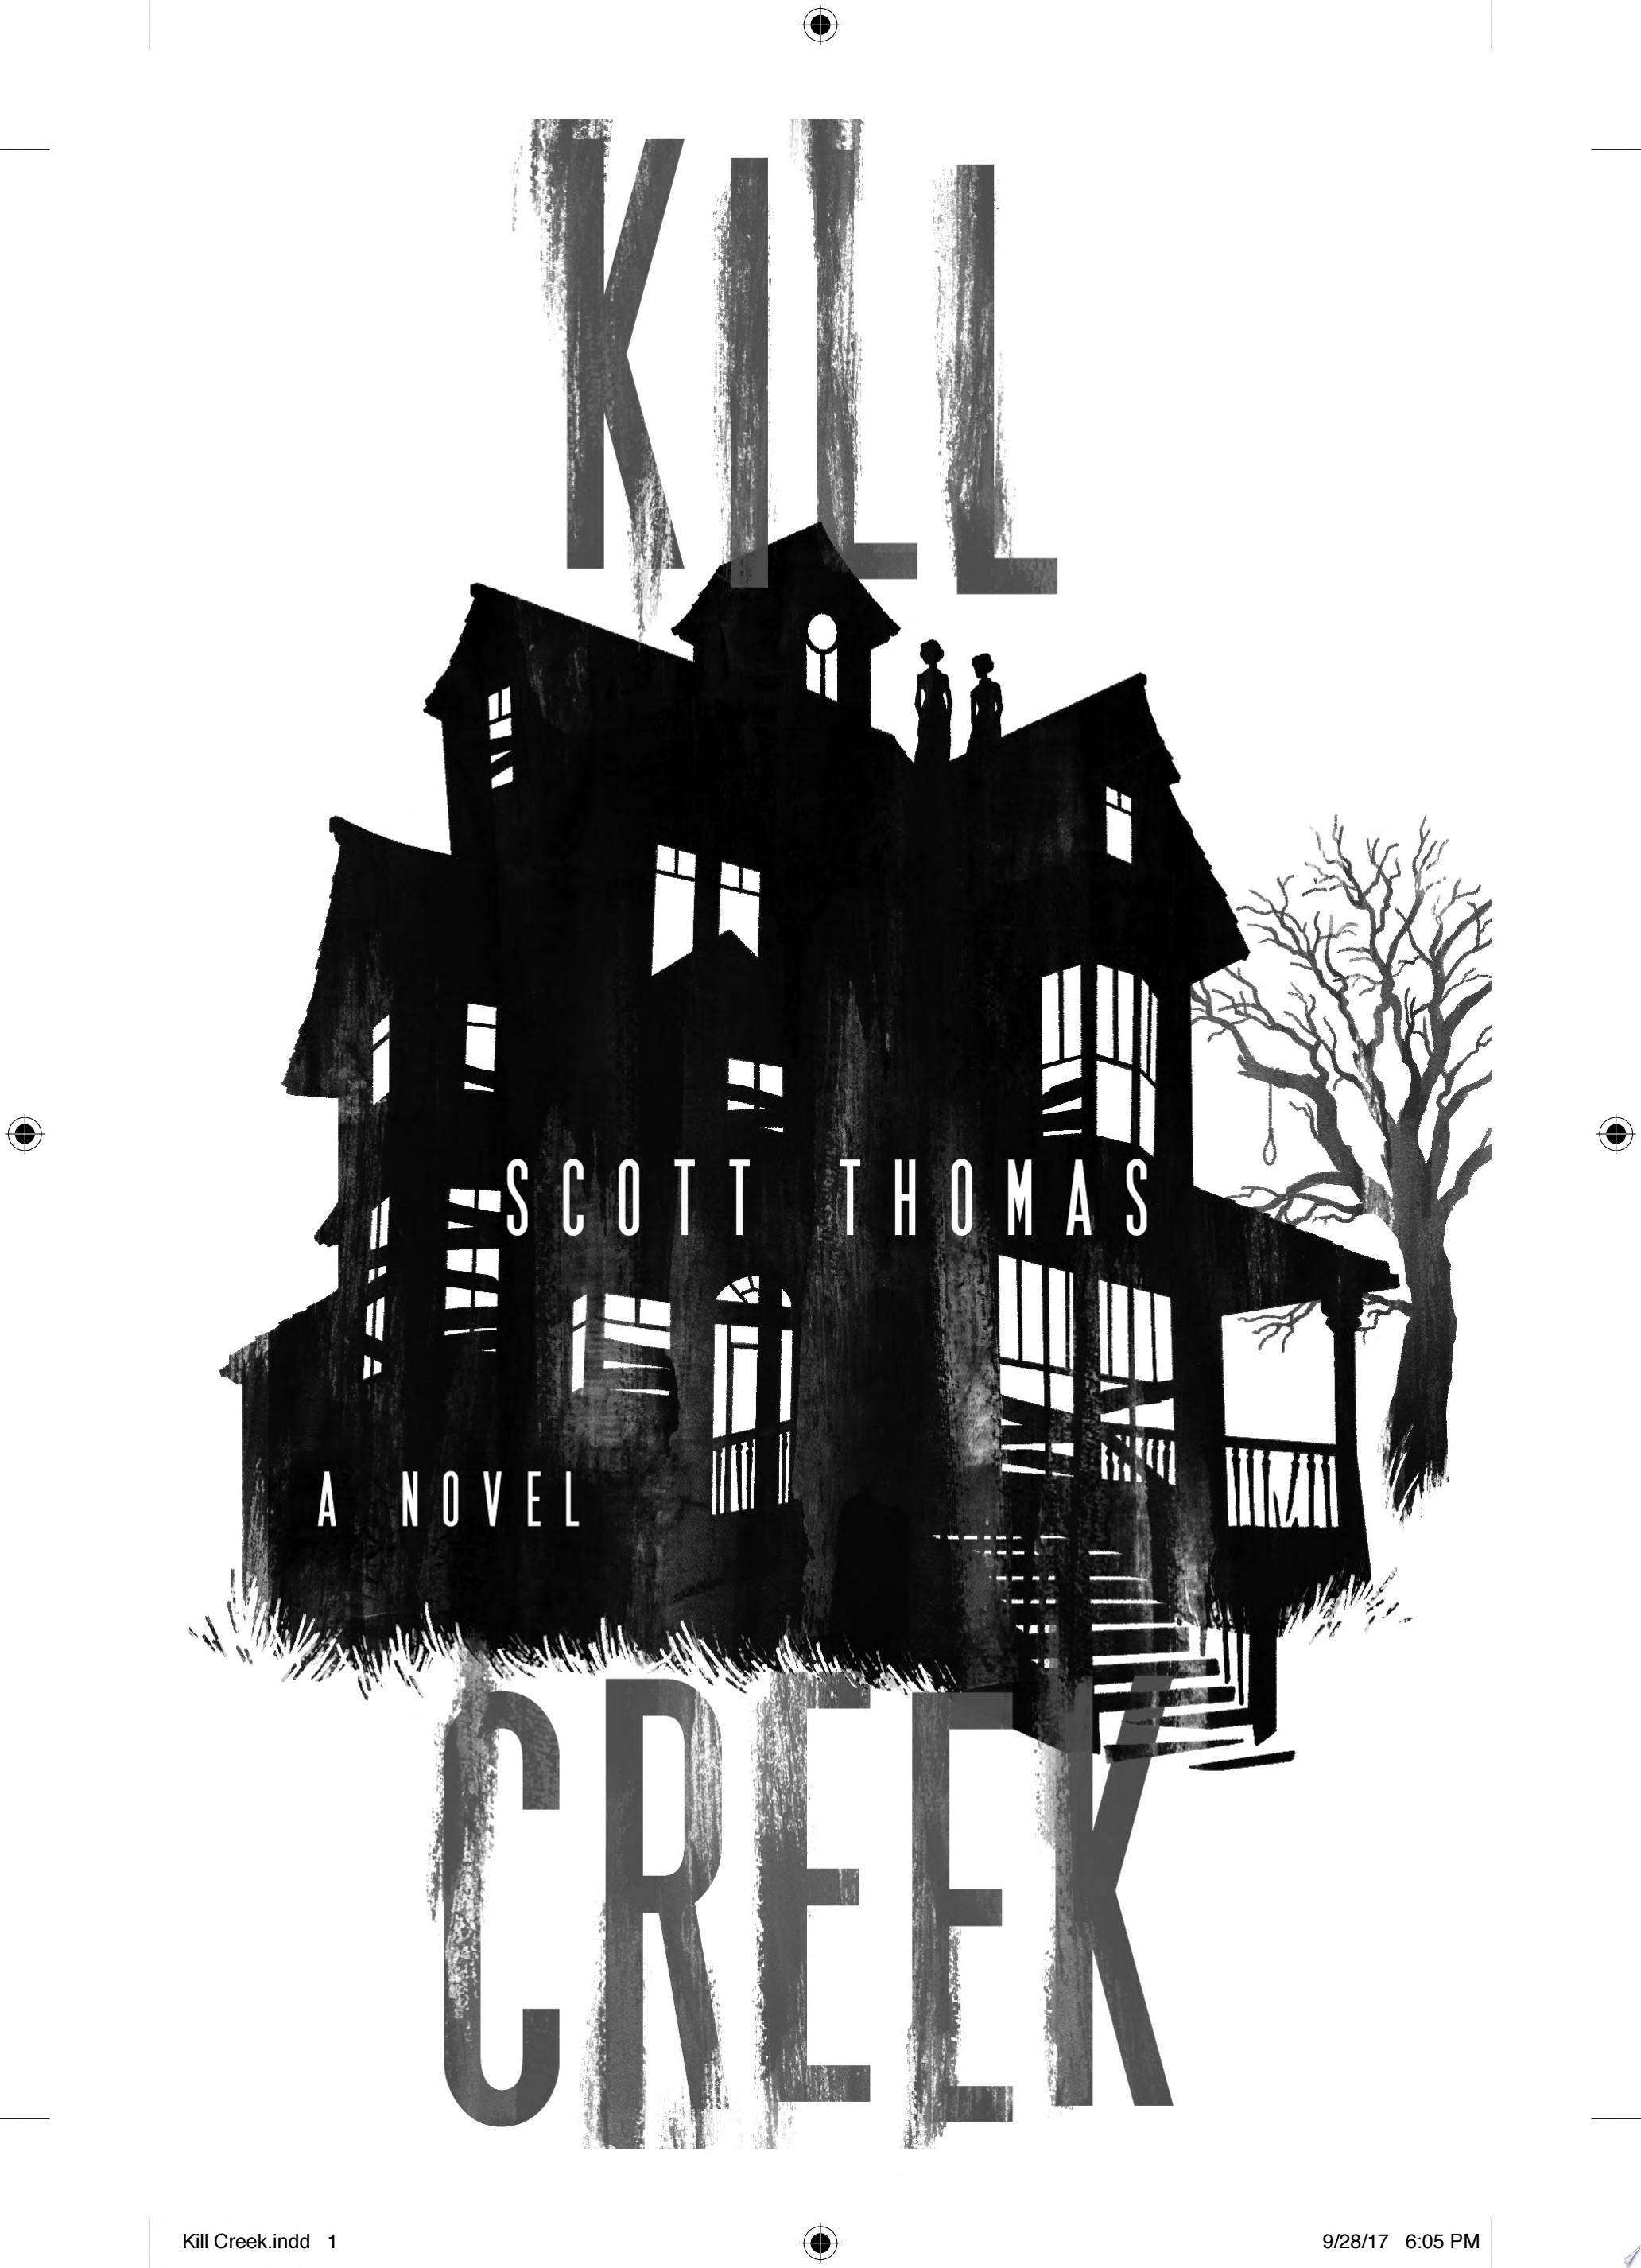 Image for "Kill Creek"